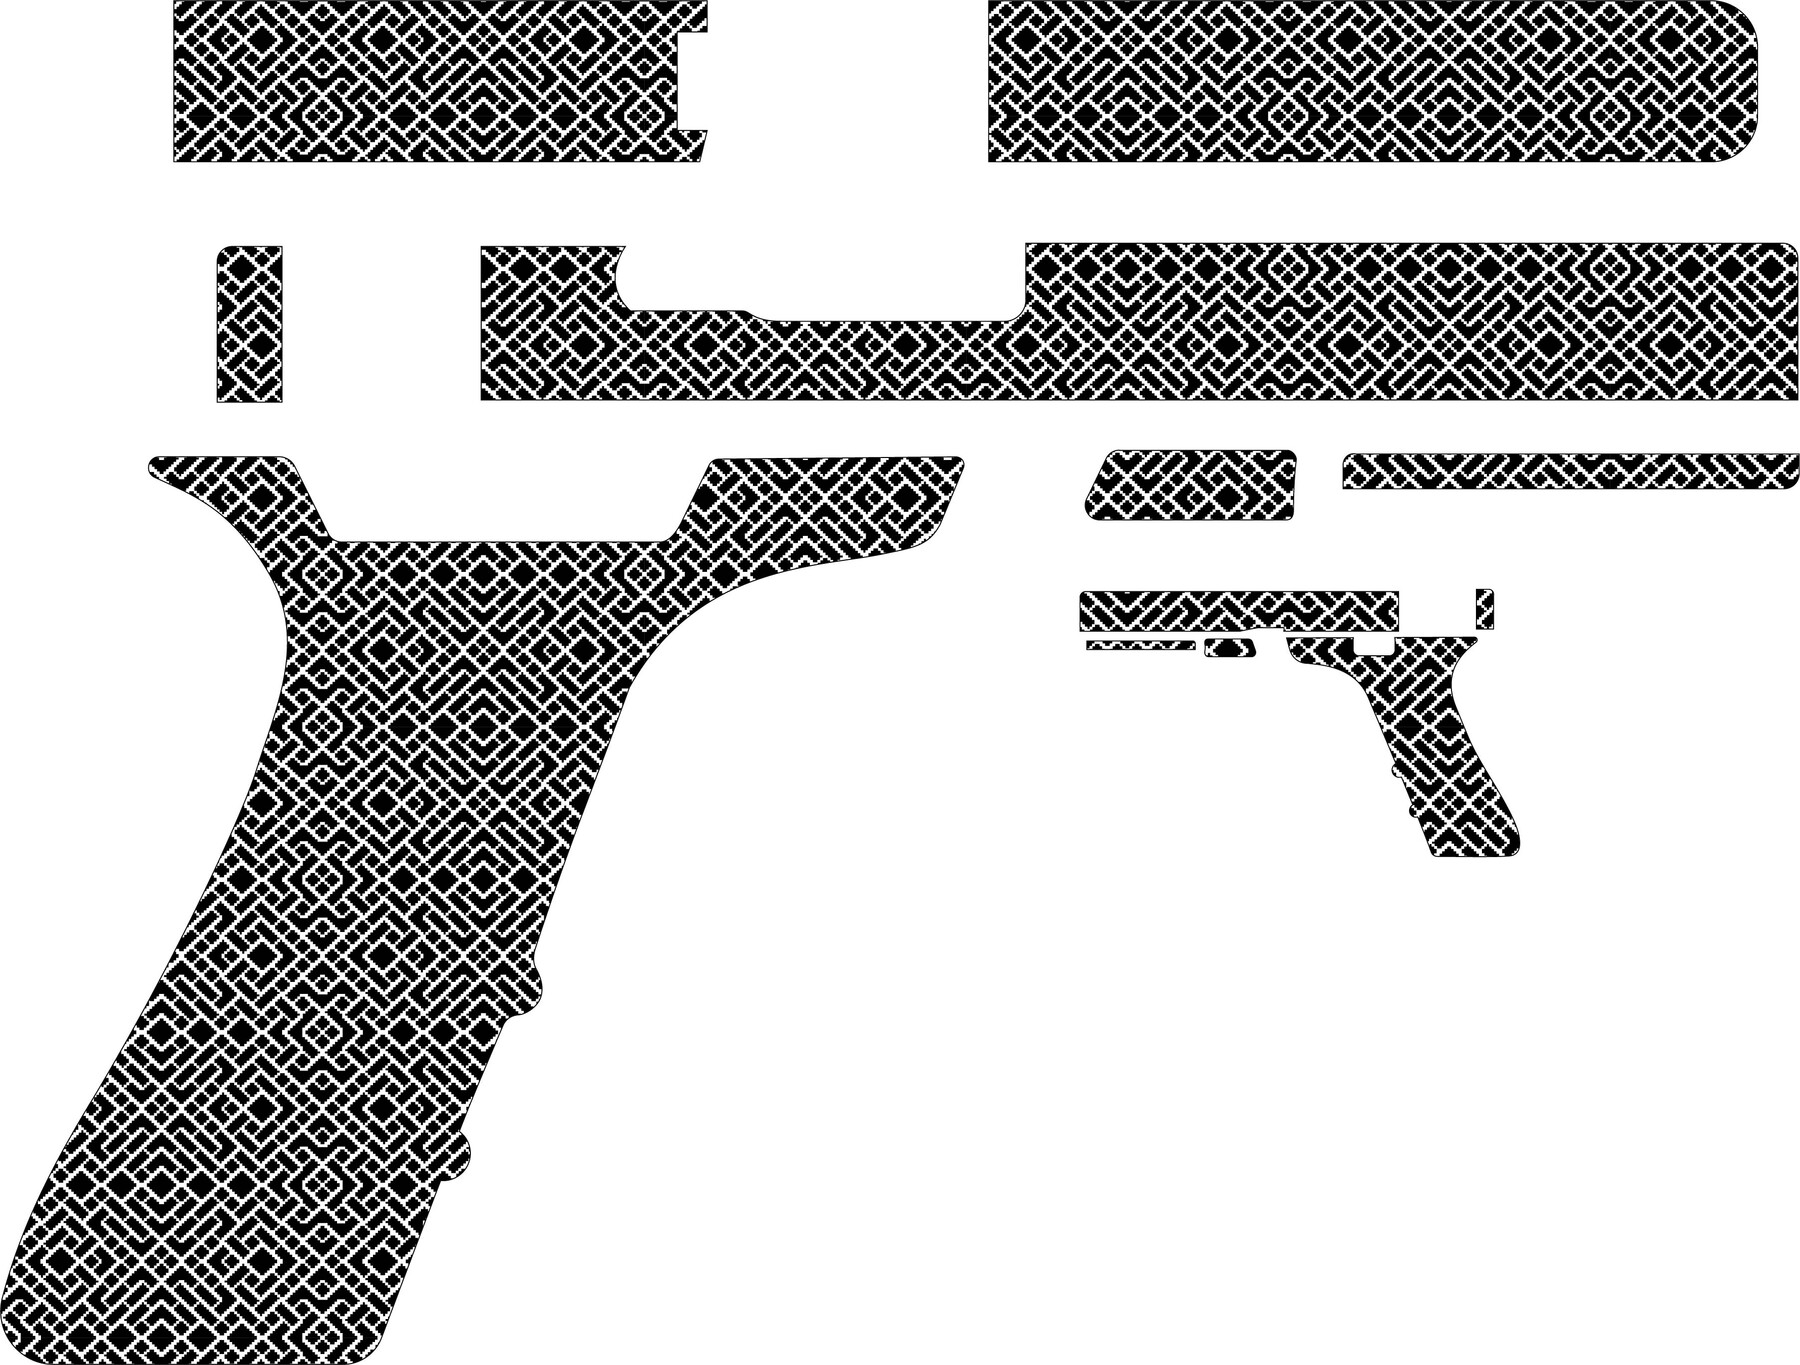 gun text art copy and paste